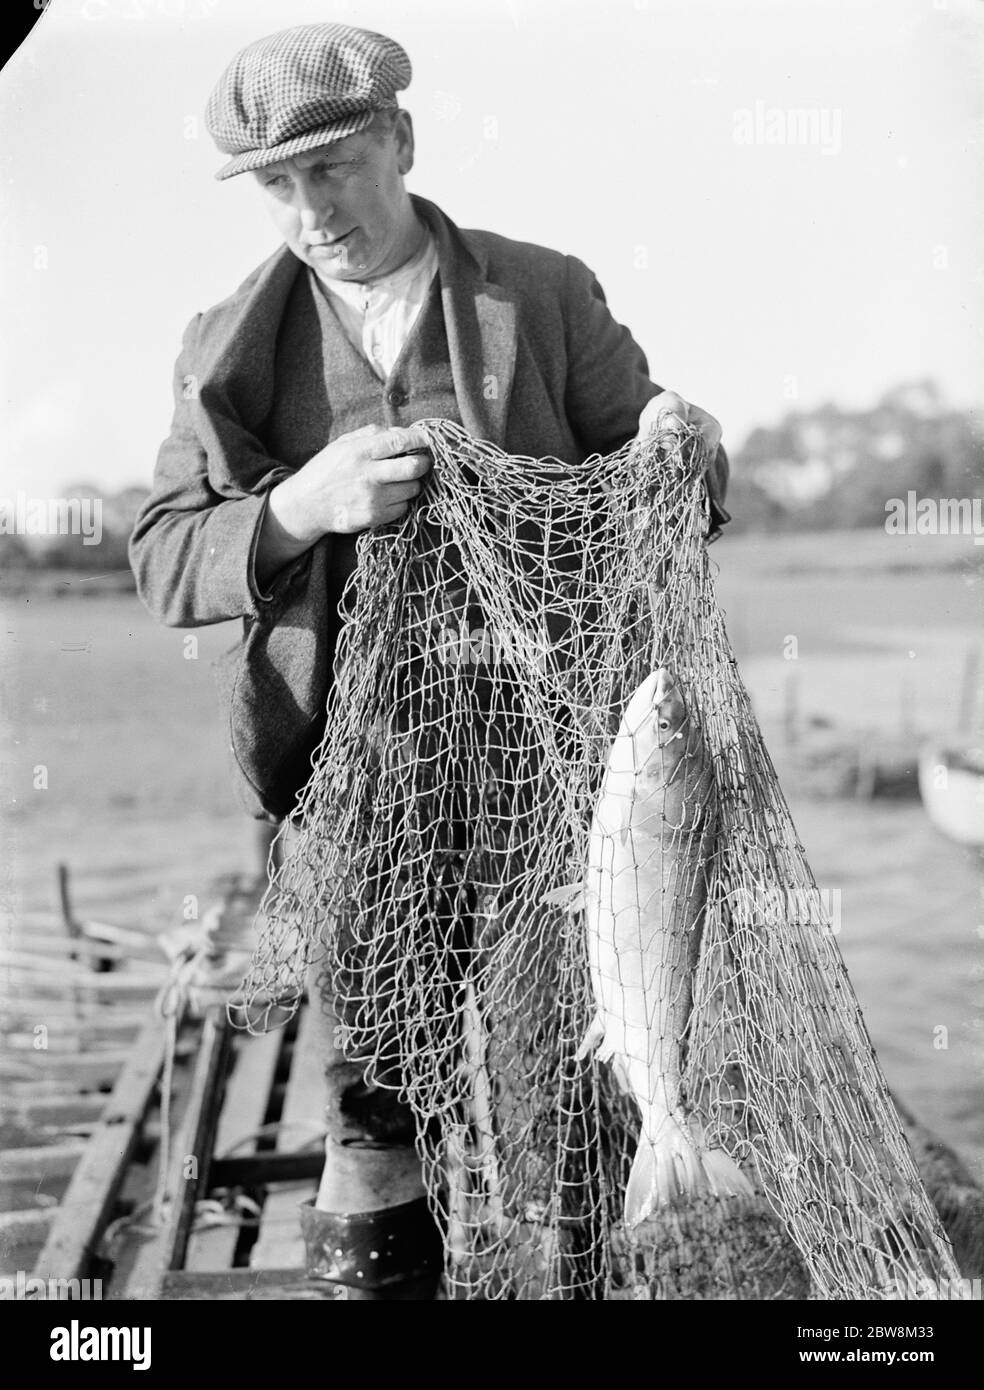 Netting fishing Black and White Stock Photos & Images - Alamy